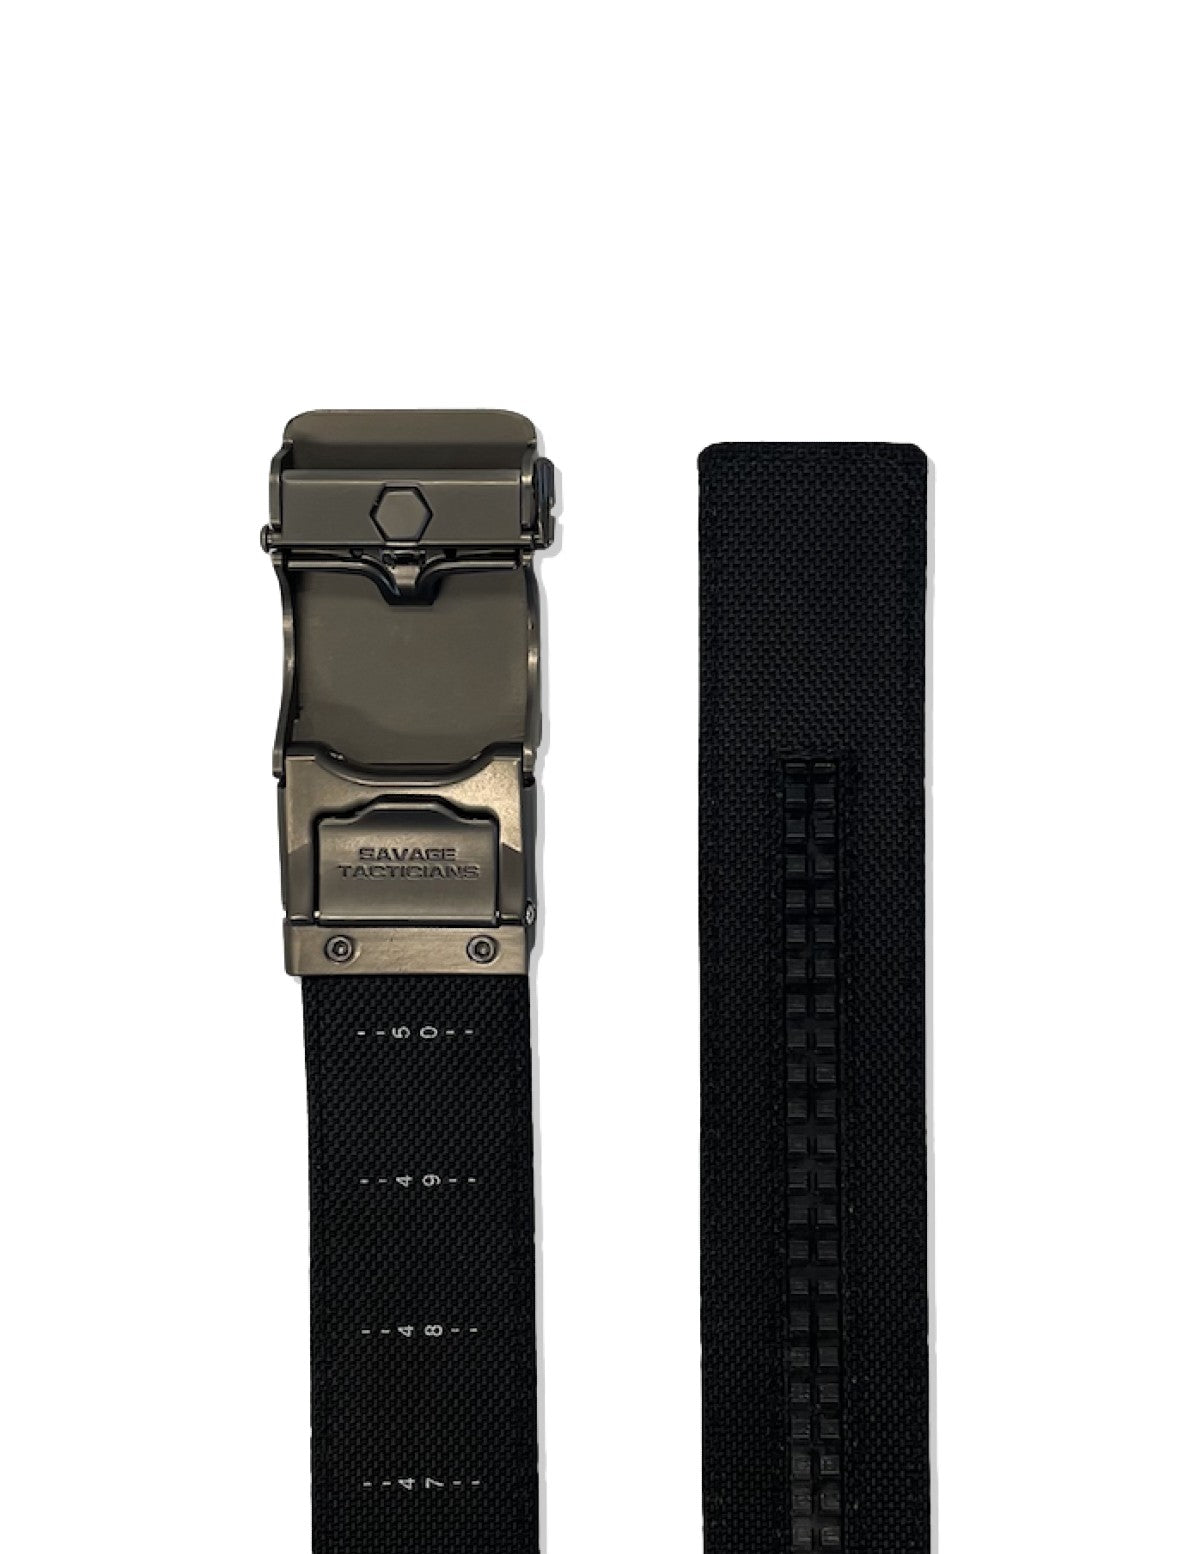 Maxx Carry Black EDC Tactical Gun Belt Reinforced Liner Ratchet Track Technology Design Adjustable Up to 50